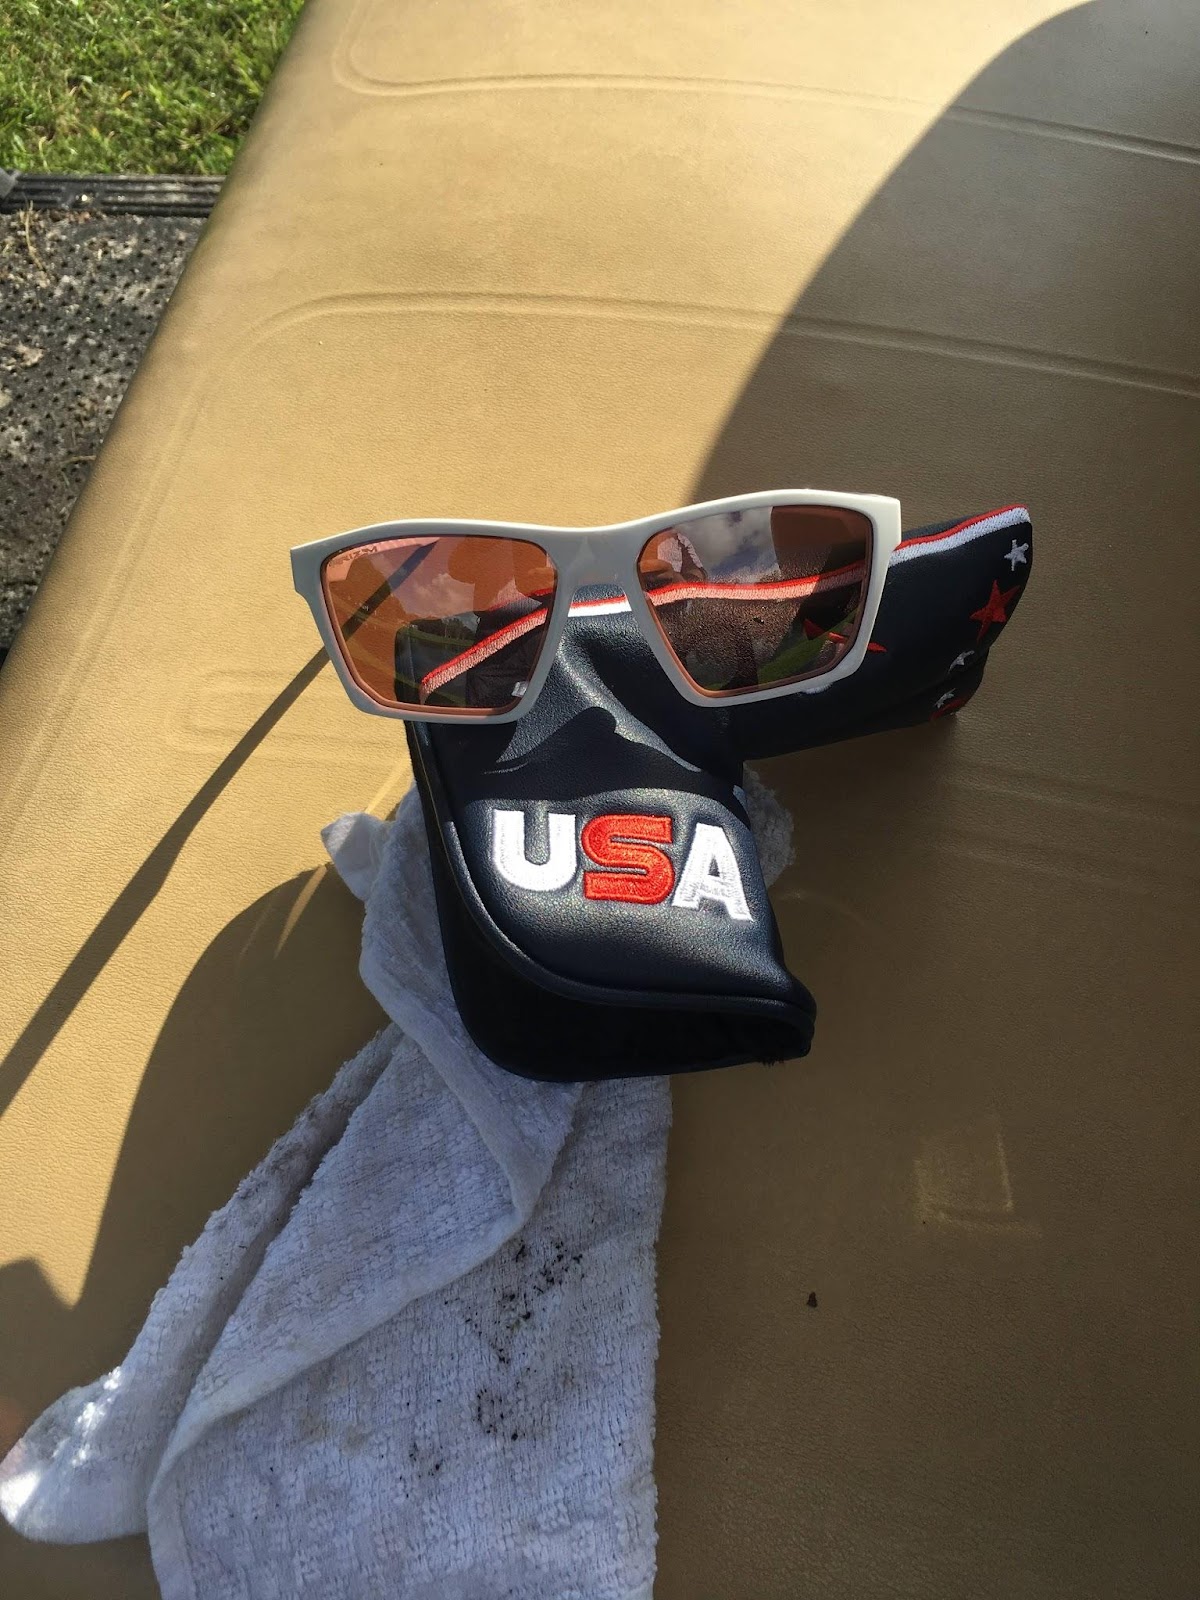 oakley targetline sunglasses review